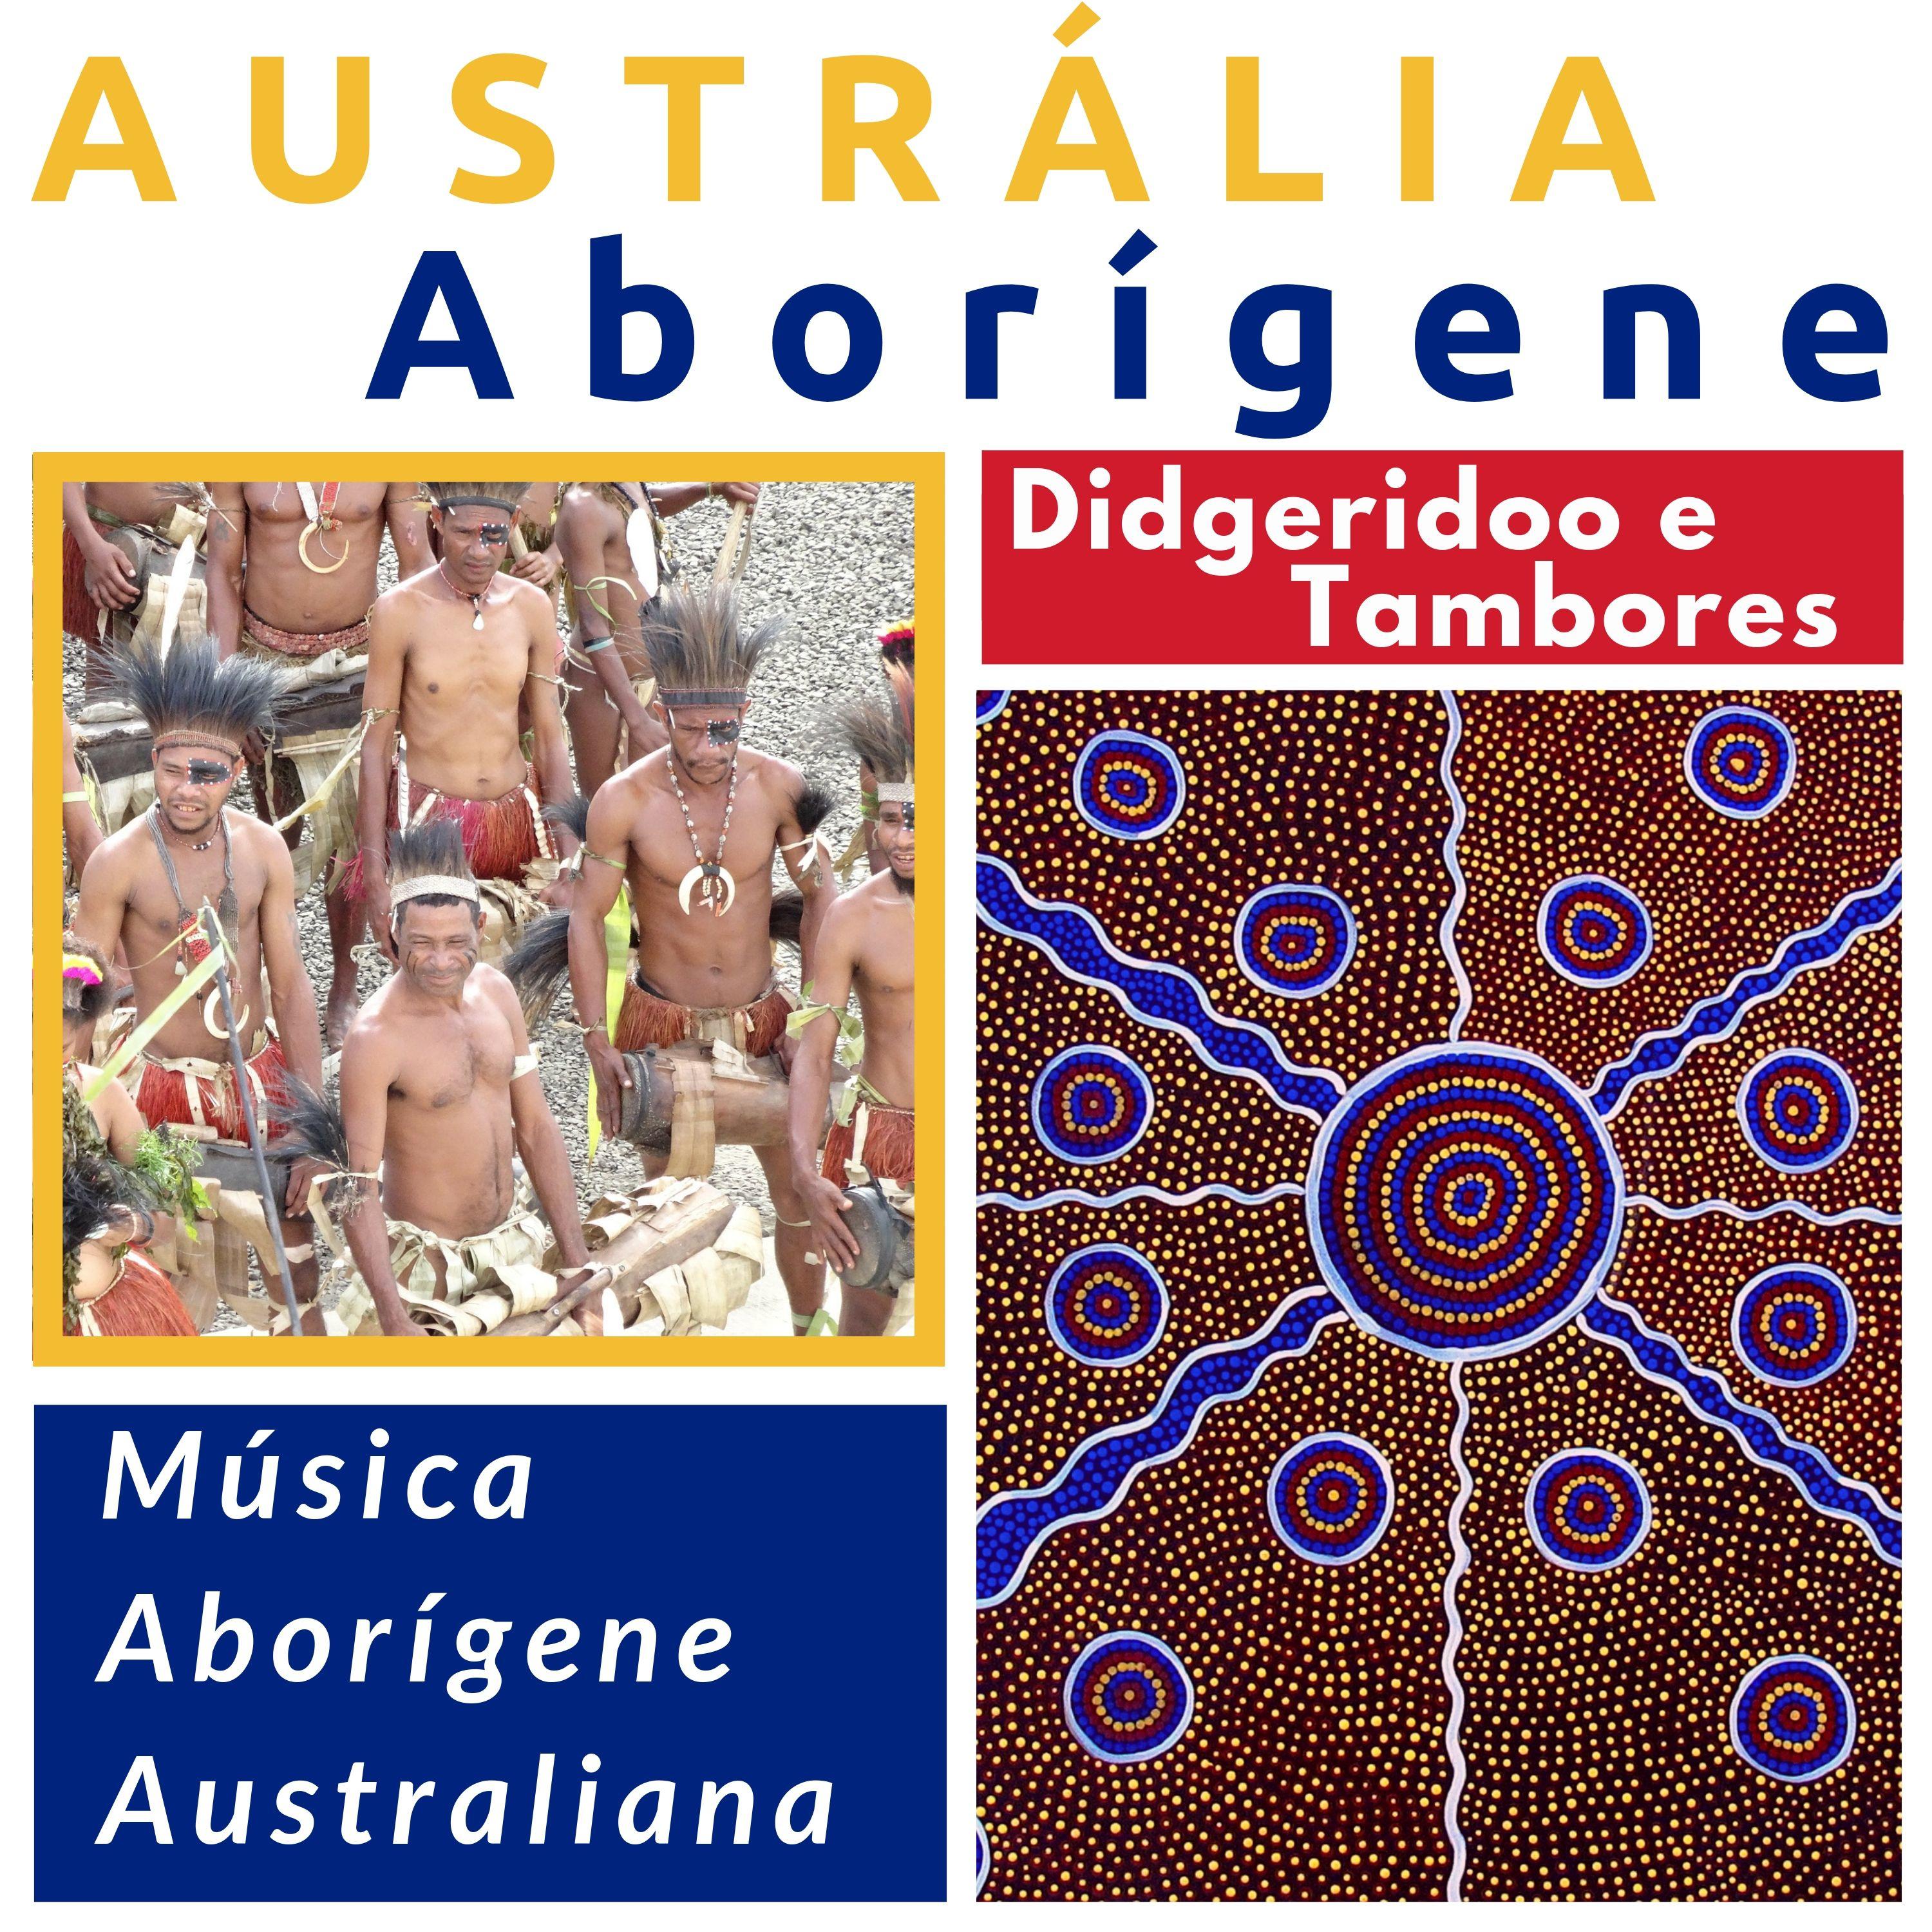 Bumerangue Abori gene